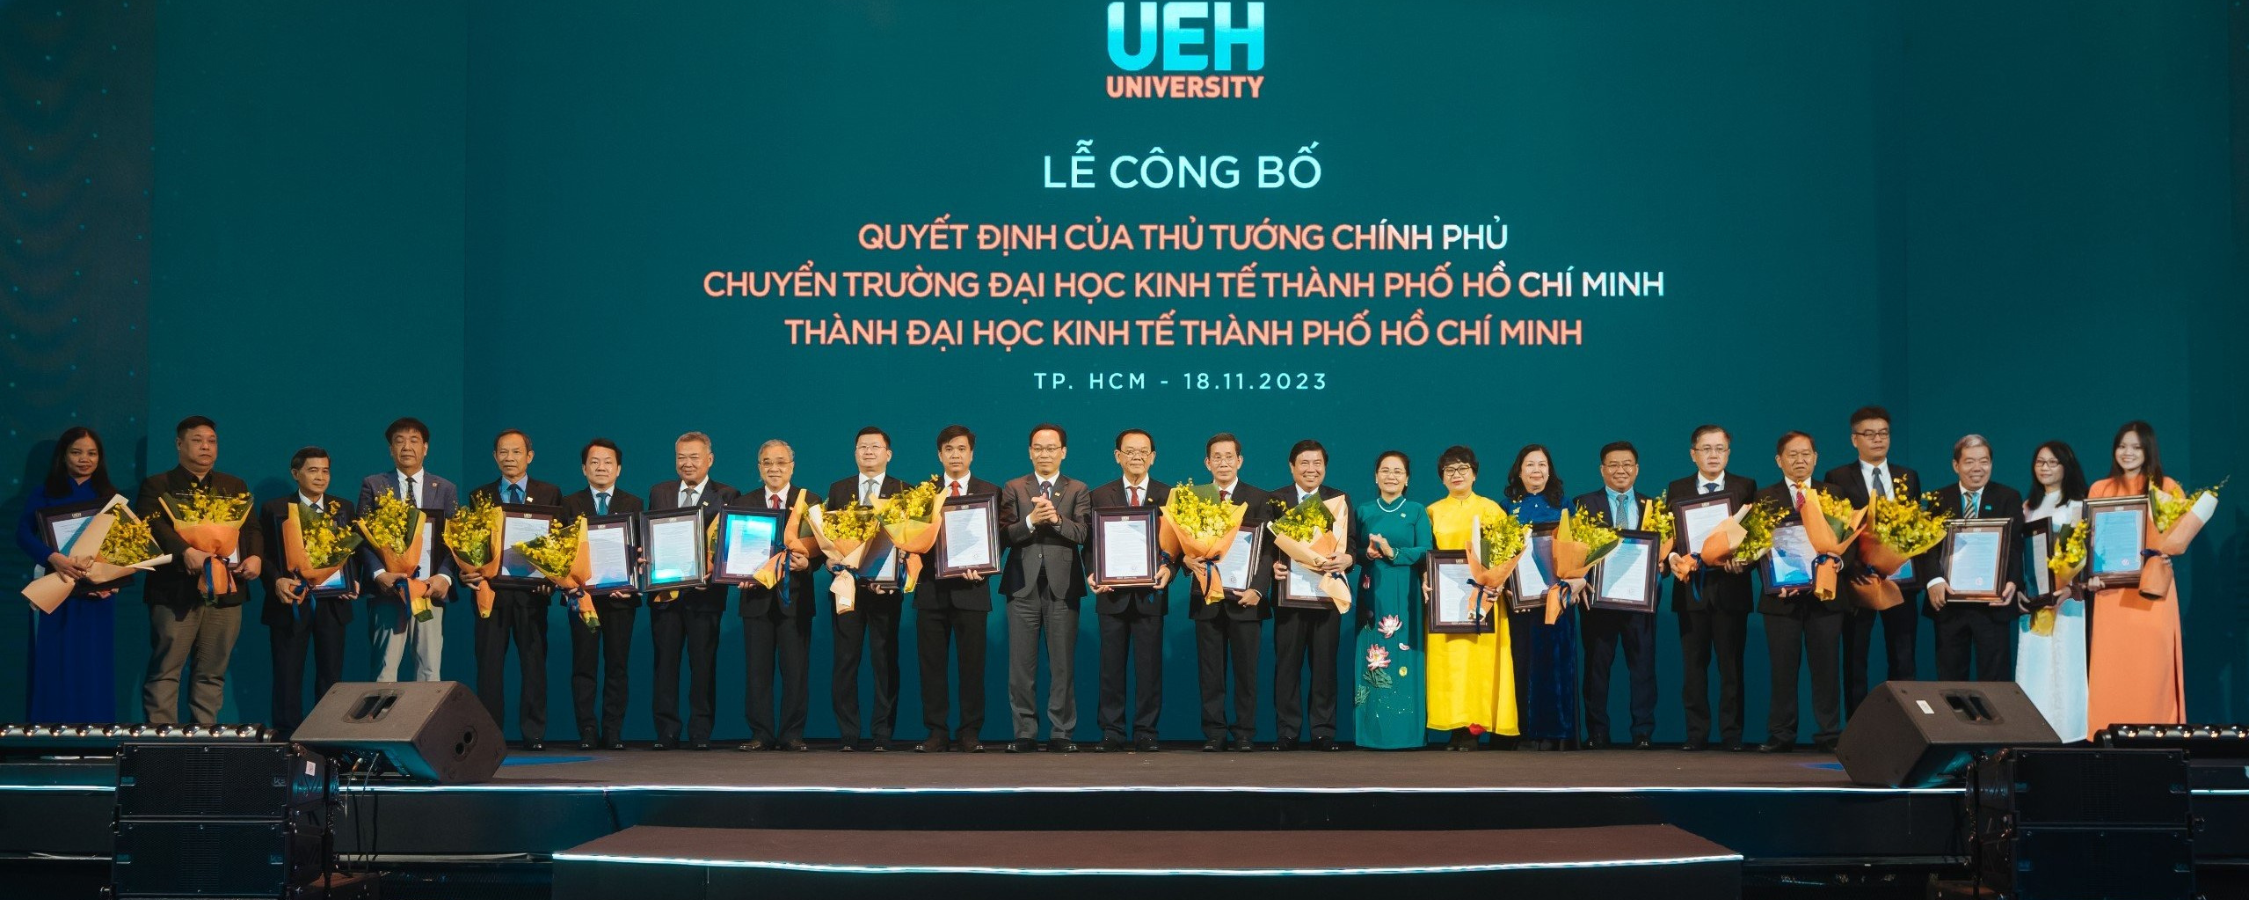 Announcement Ceremony of the Prime Minister's Decision to Transform University of Economics Ho Chi Minh City

